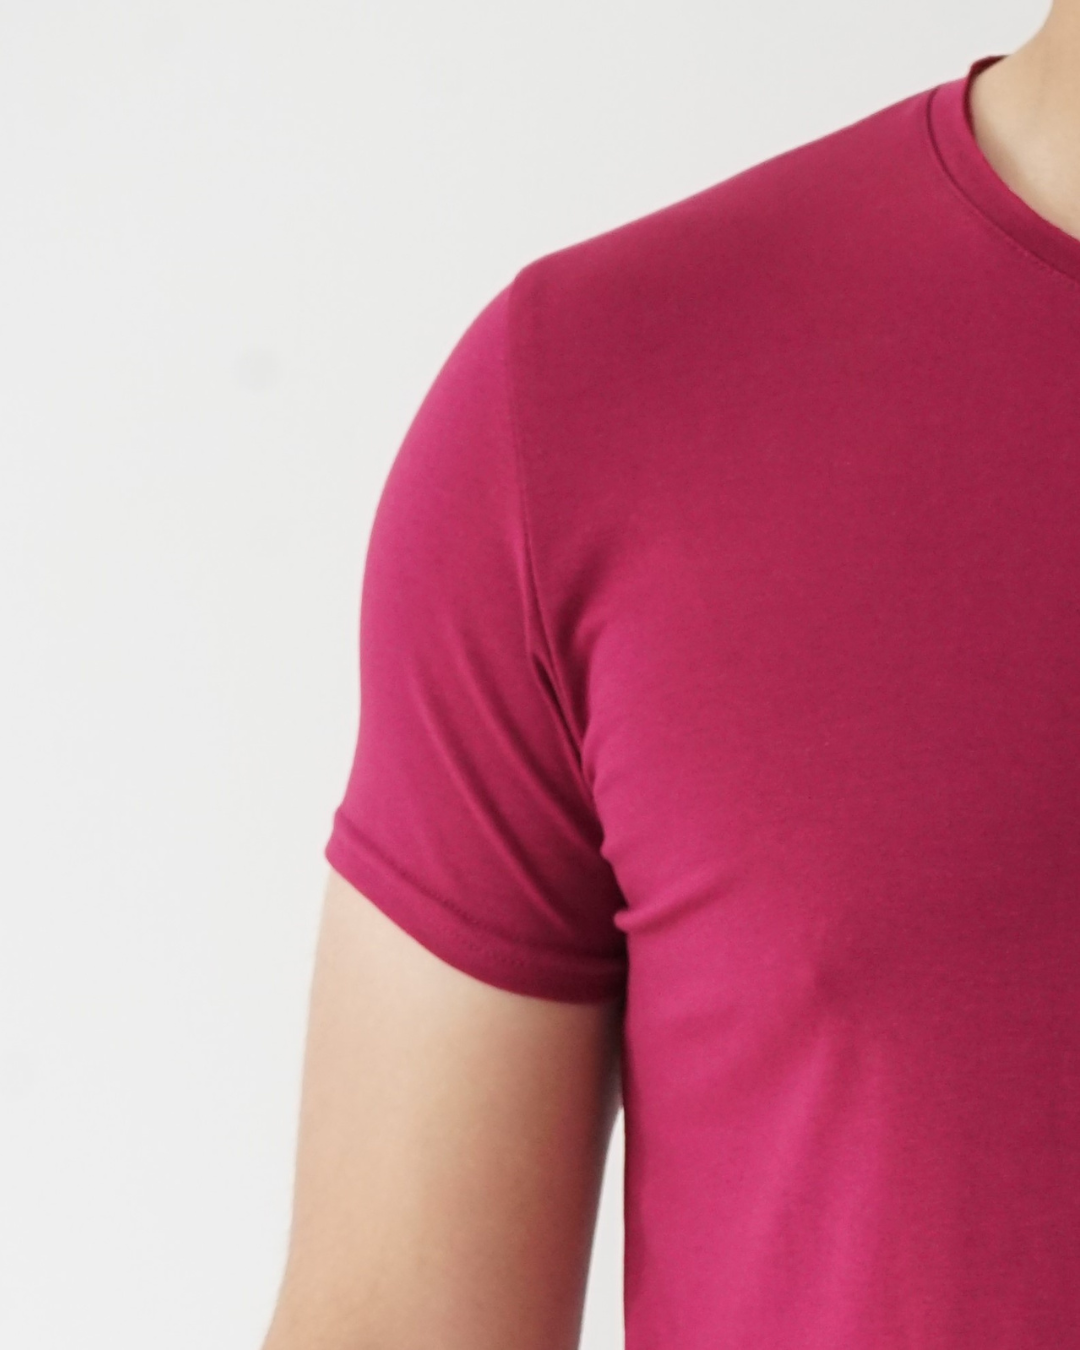 Cherry Wine T-shirt - Short Sleeve Wide Neck Original Bottom